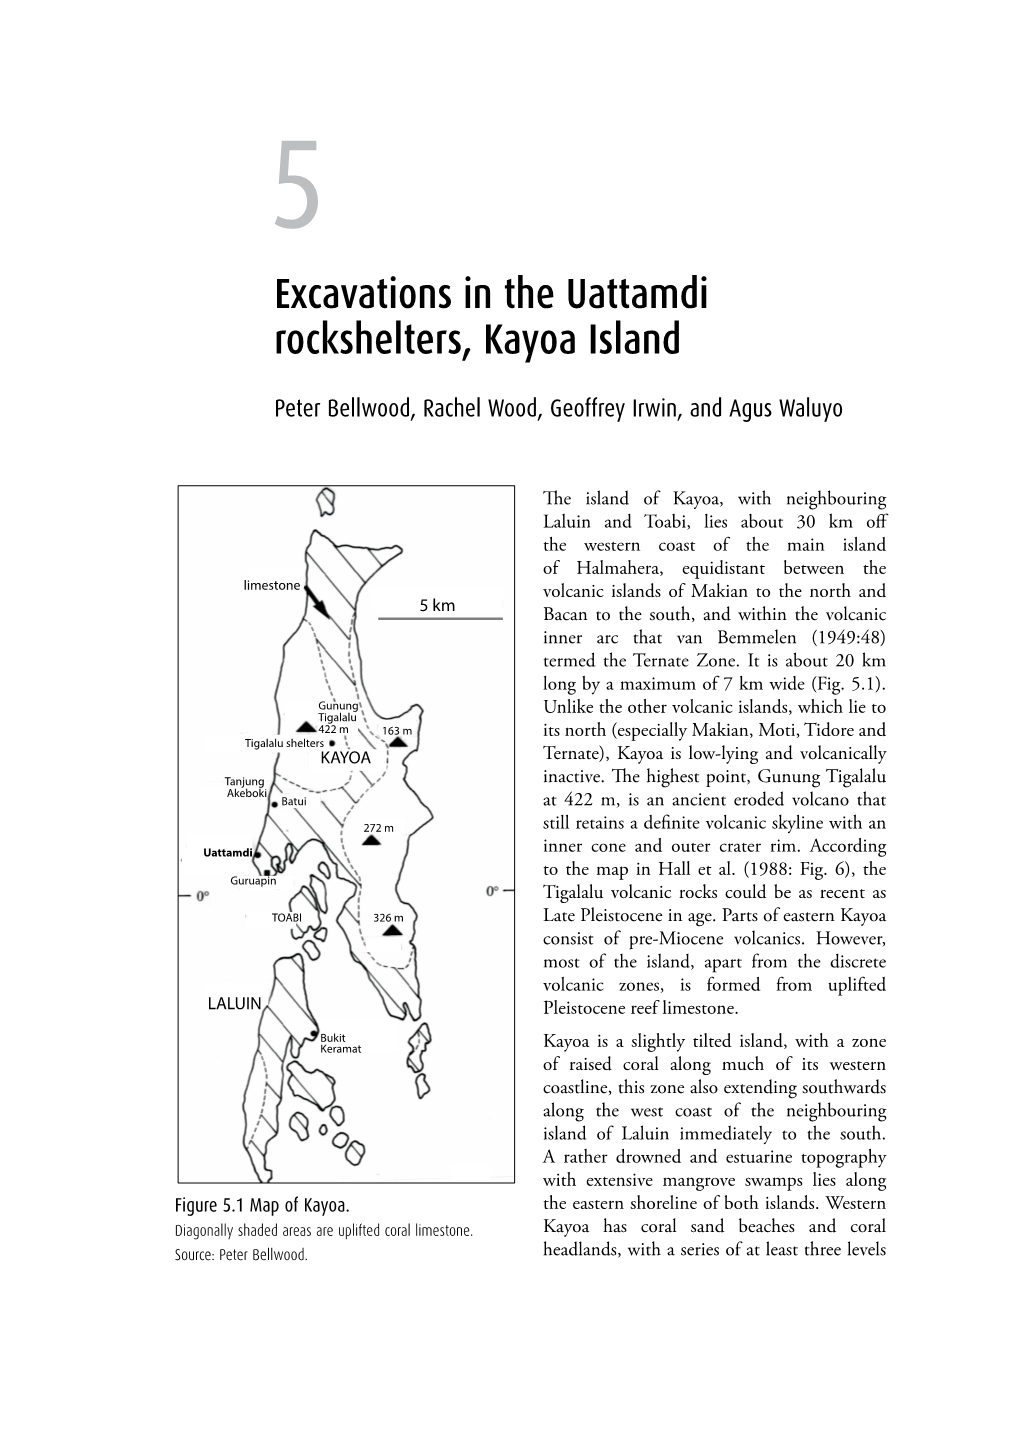 5. Excavations in the Uattamdi Rockshelters, Kayoa Island 69